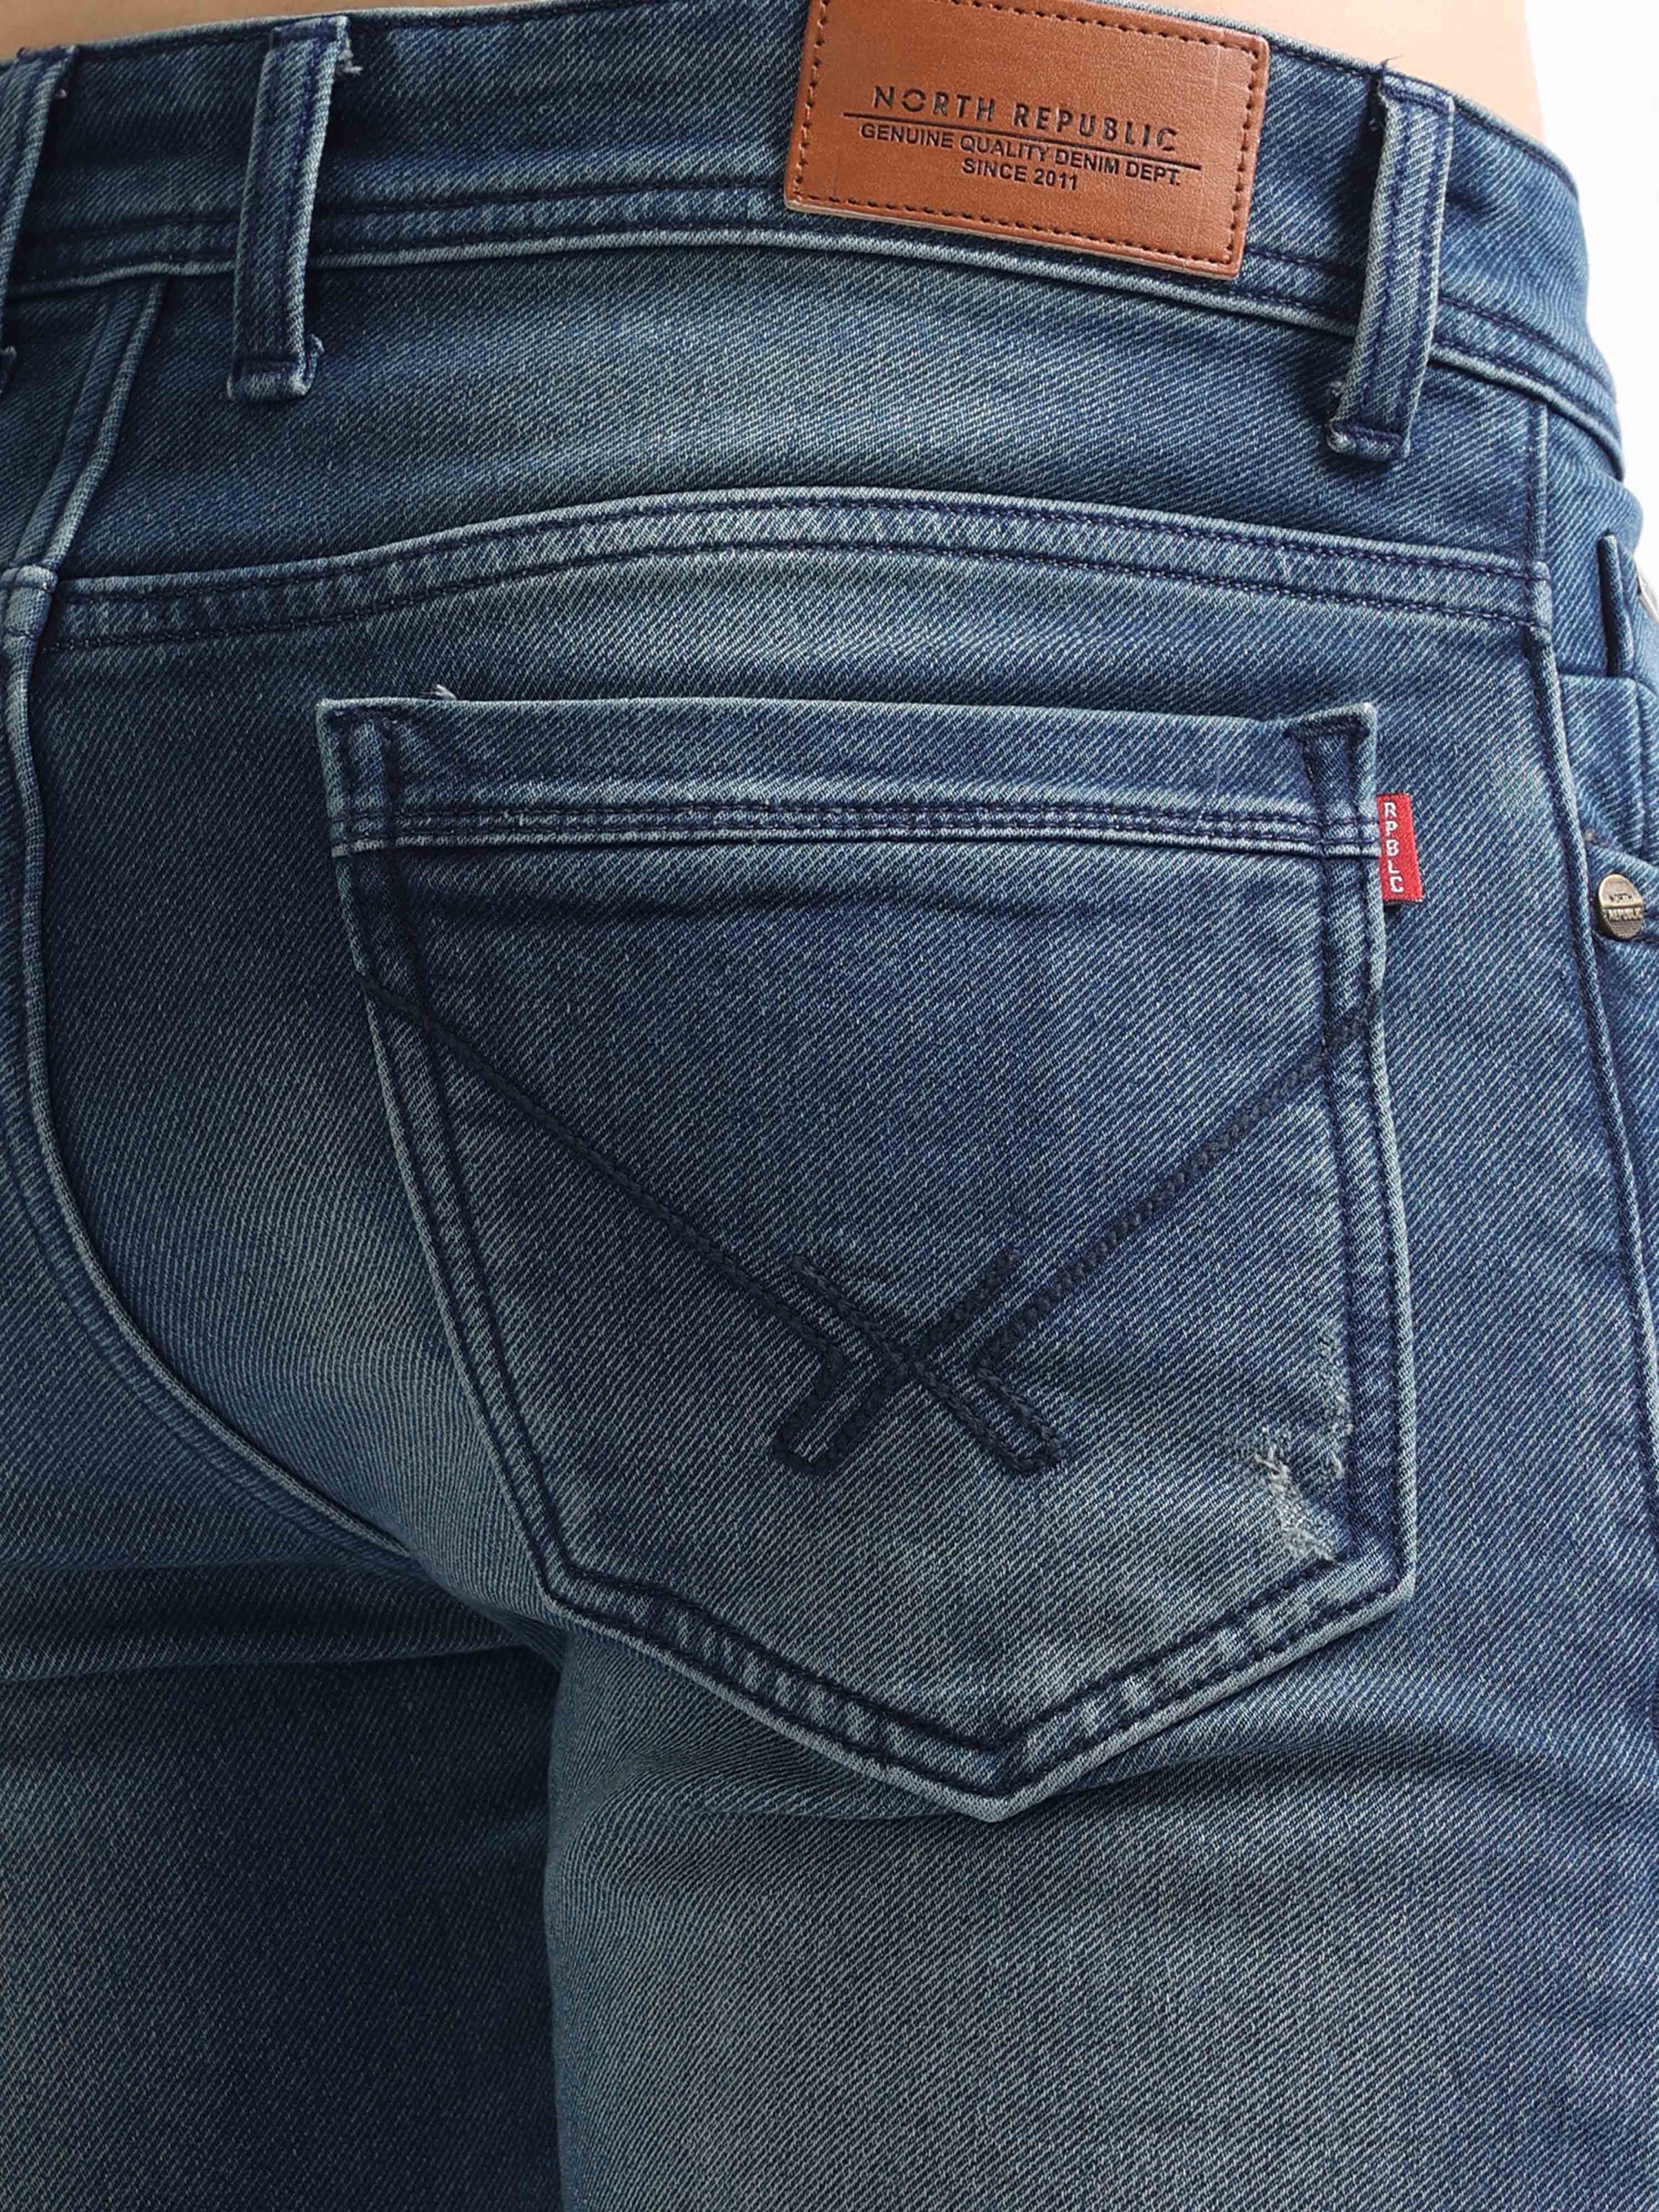 Dark Wash Comfy Men's Denim Jeans